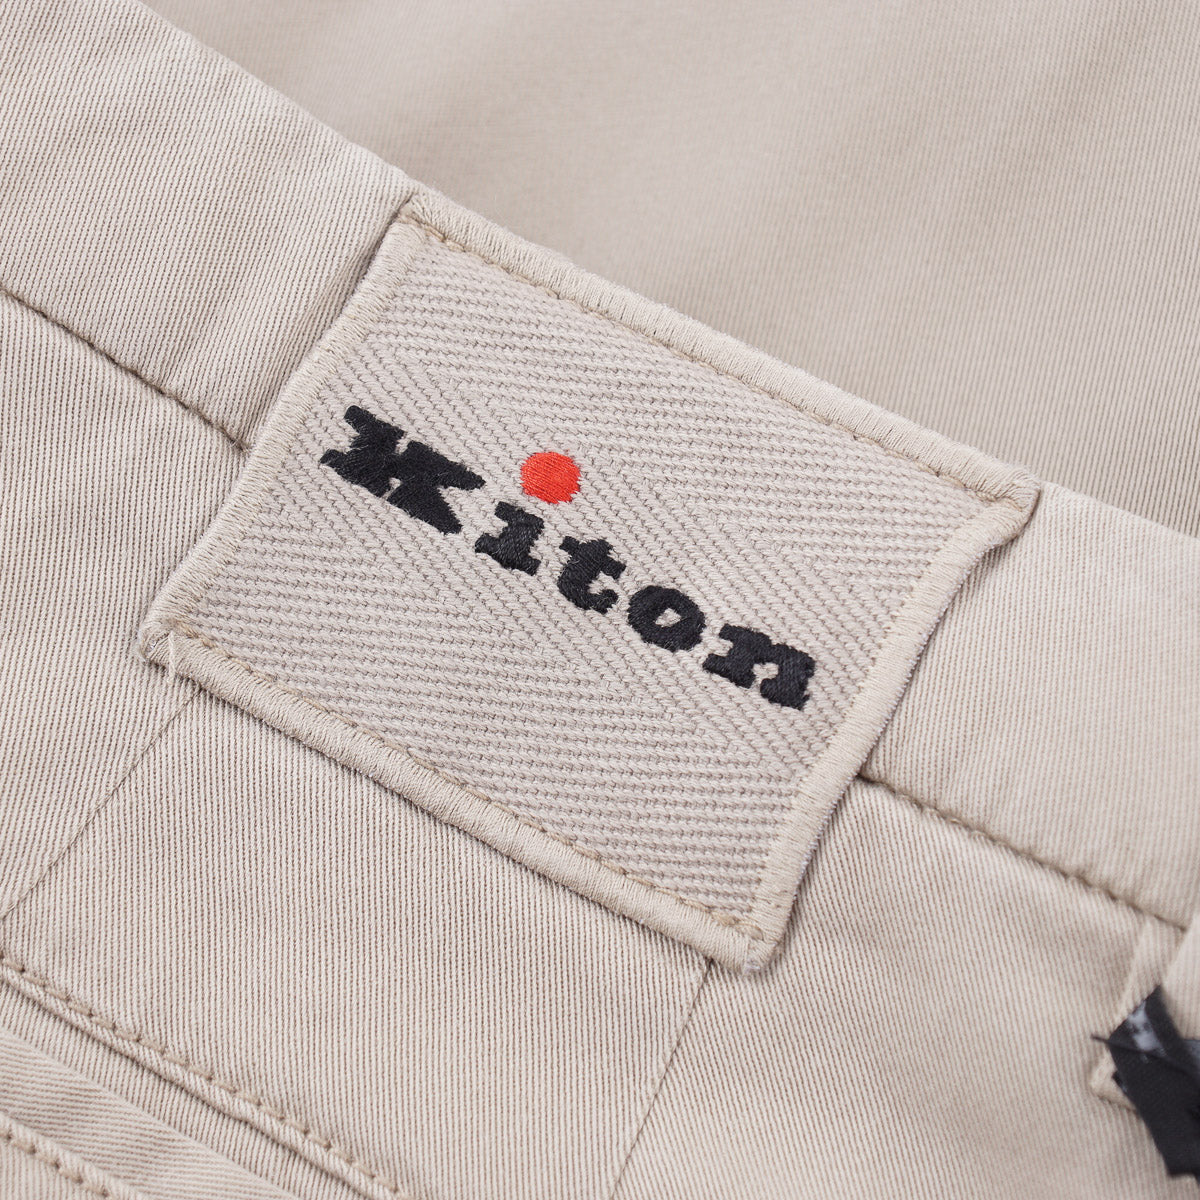 Kiton Stretch-Blend Casual Pants - Top Shelf Apparel